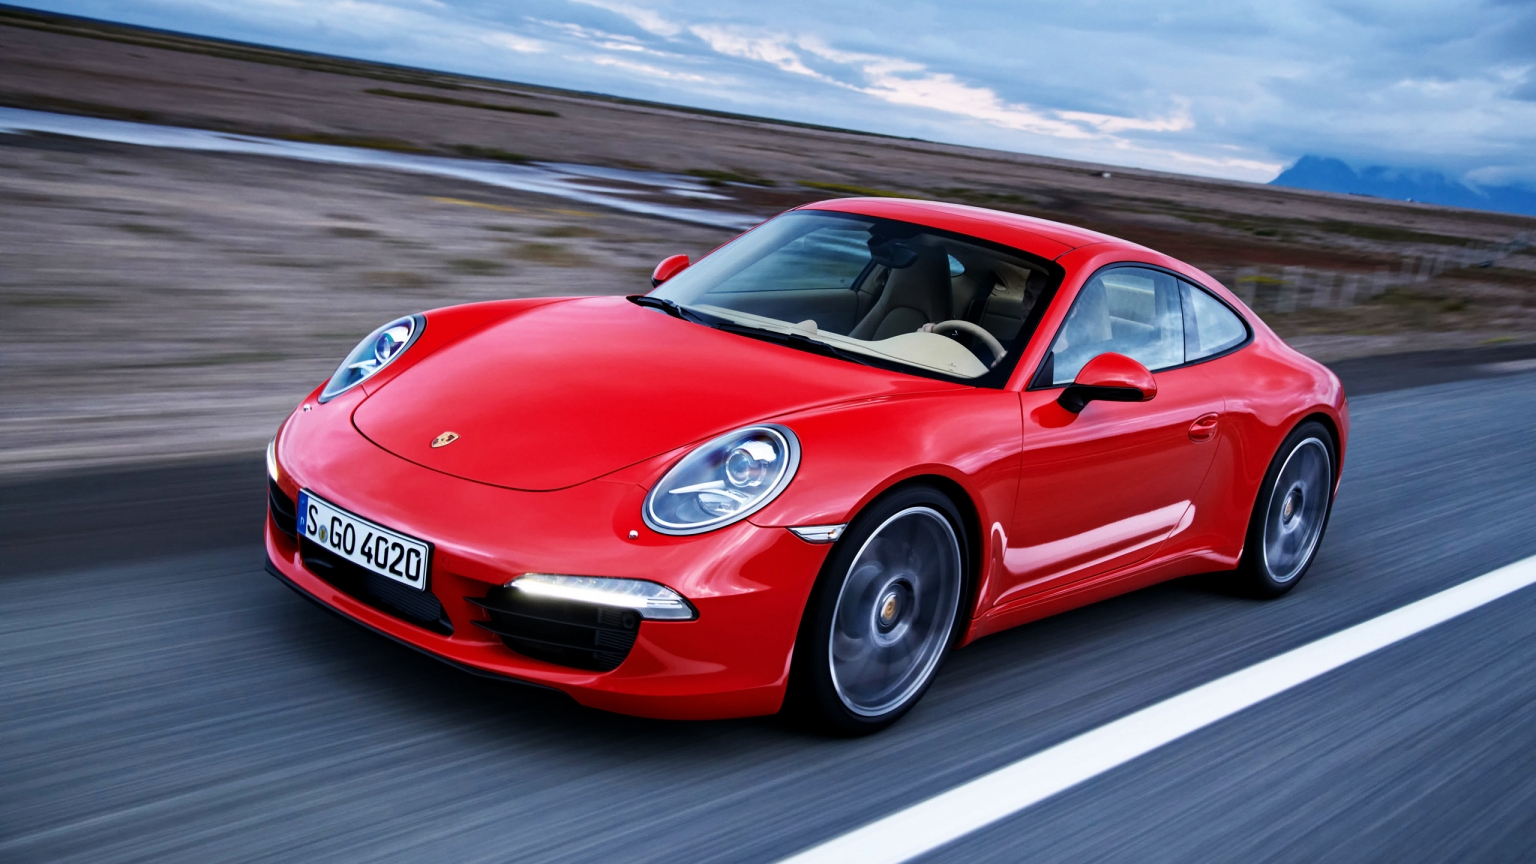 2012 Porsche 911 Carrera for 1536 x 864 HDTV resolution